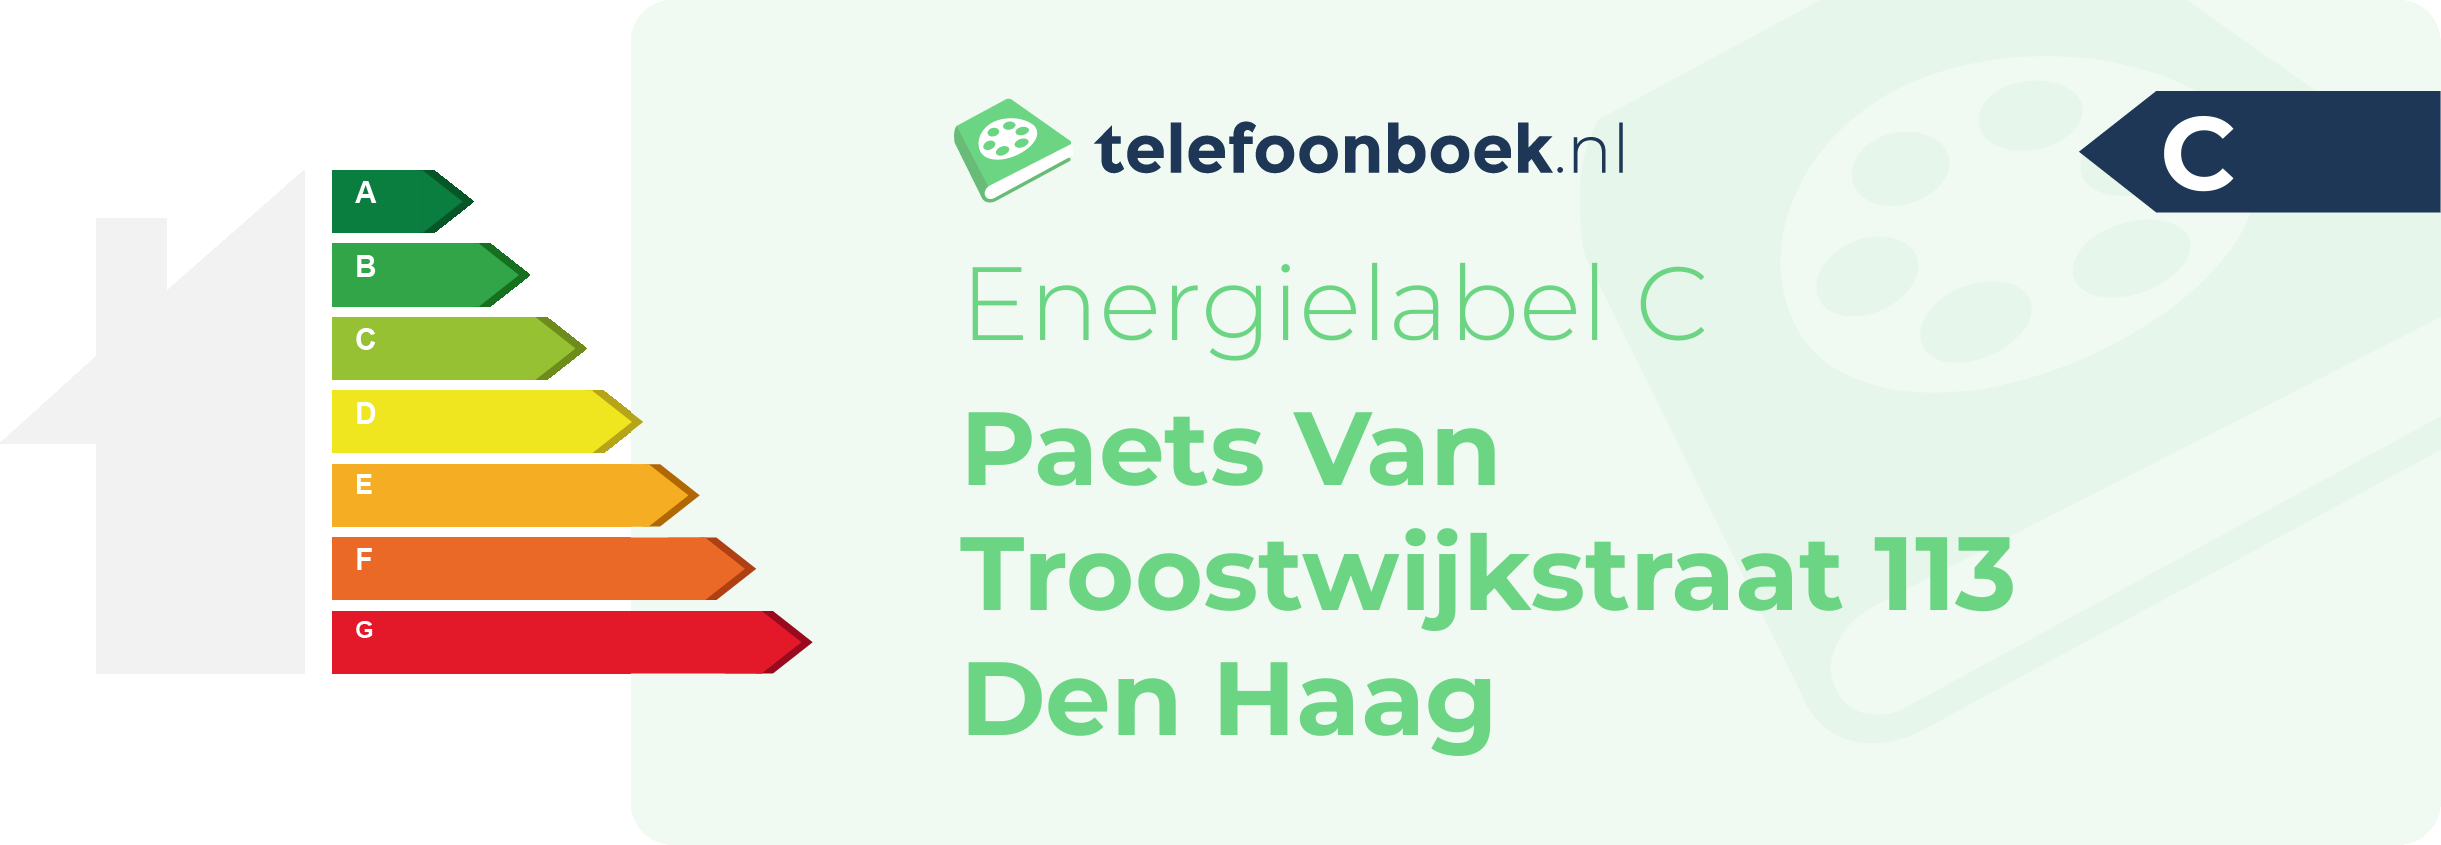 Energielabel Paets Van Troostwijkstraat 113 Den Haag